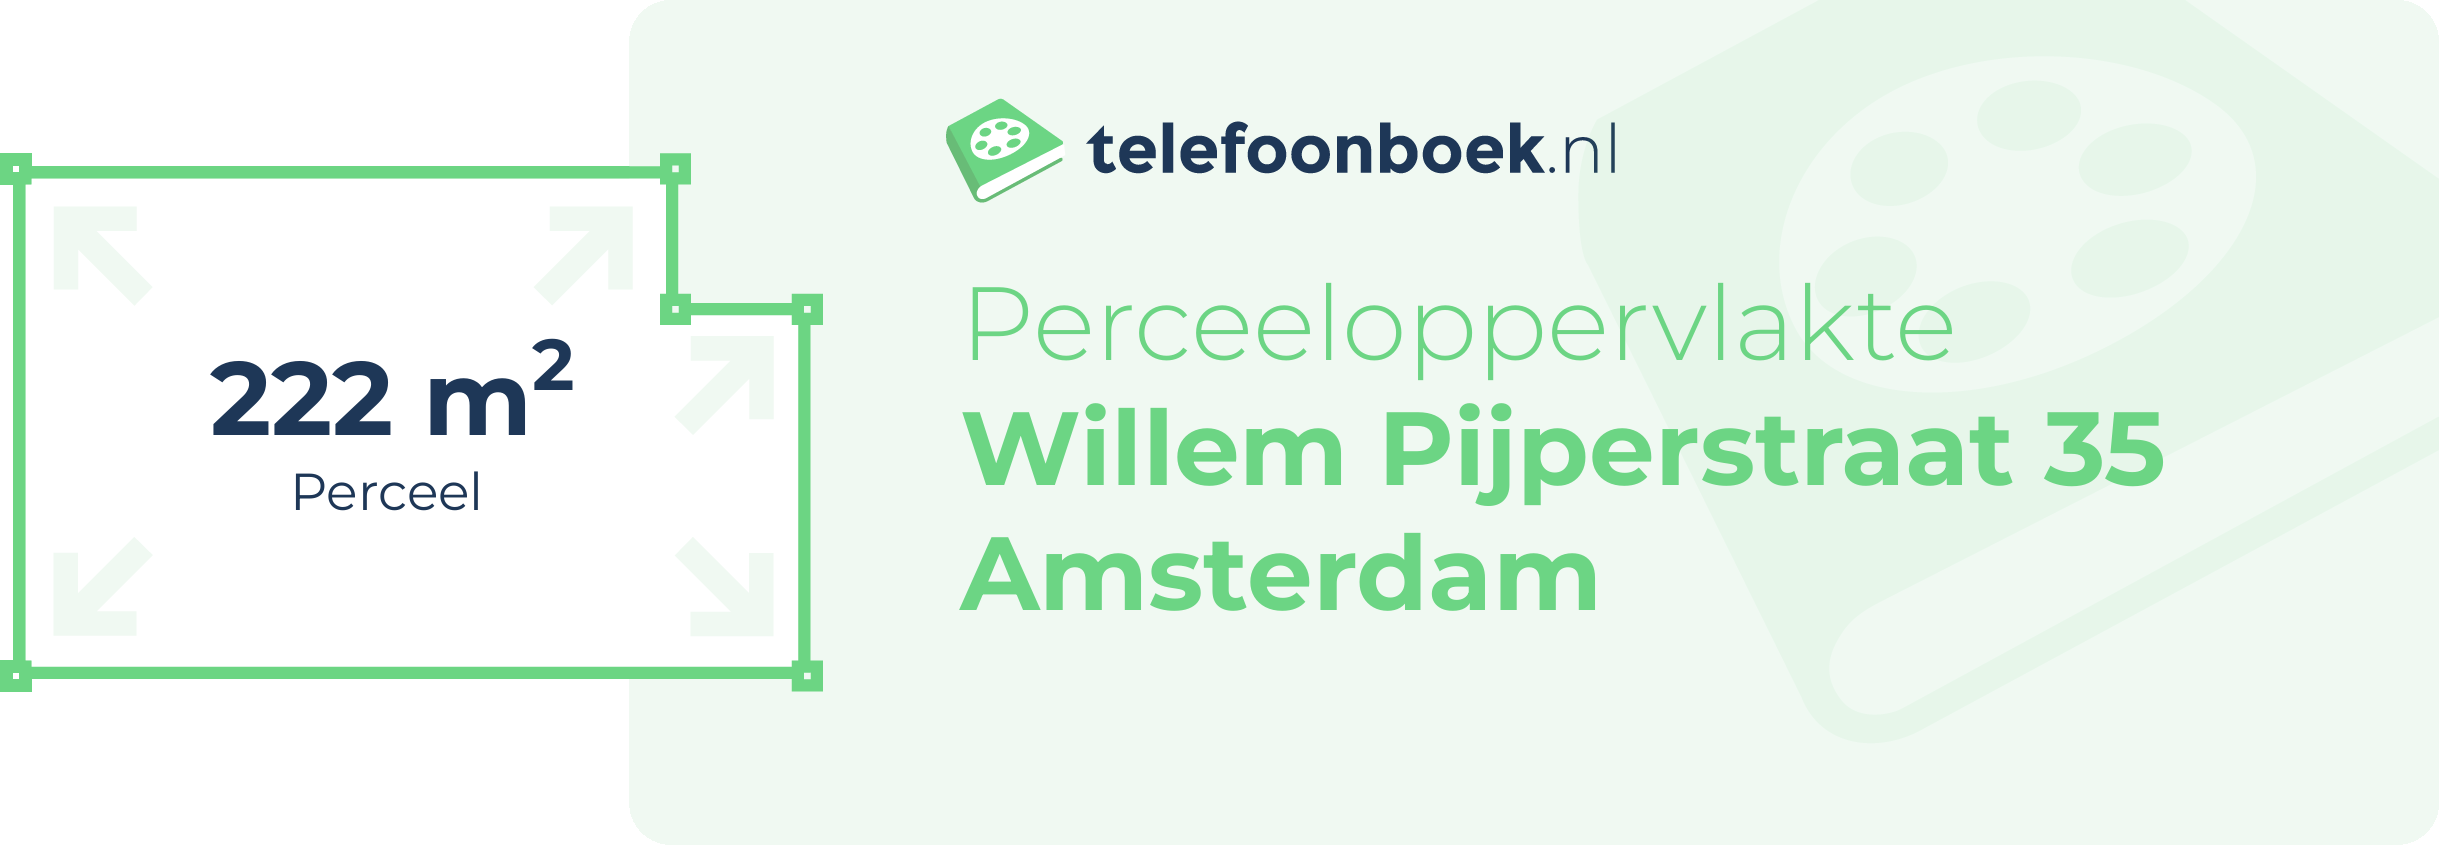 Perceeloppervlakte Willem Pijperstraat 35 Amsterdam